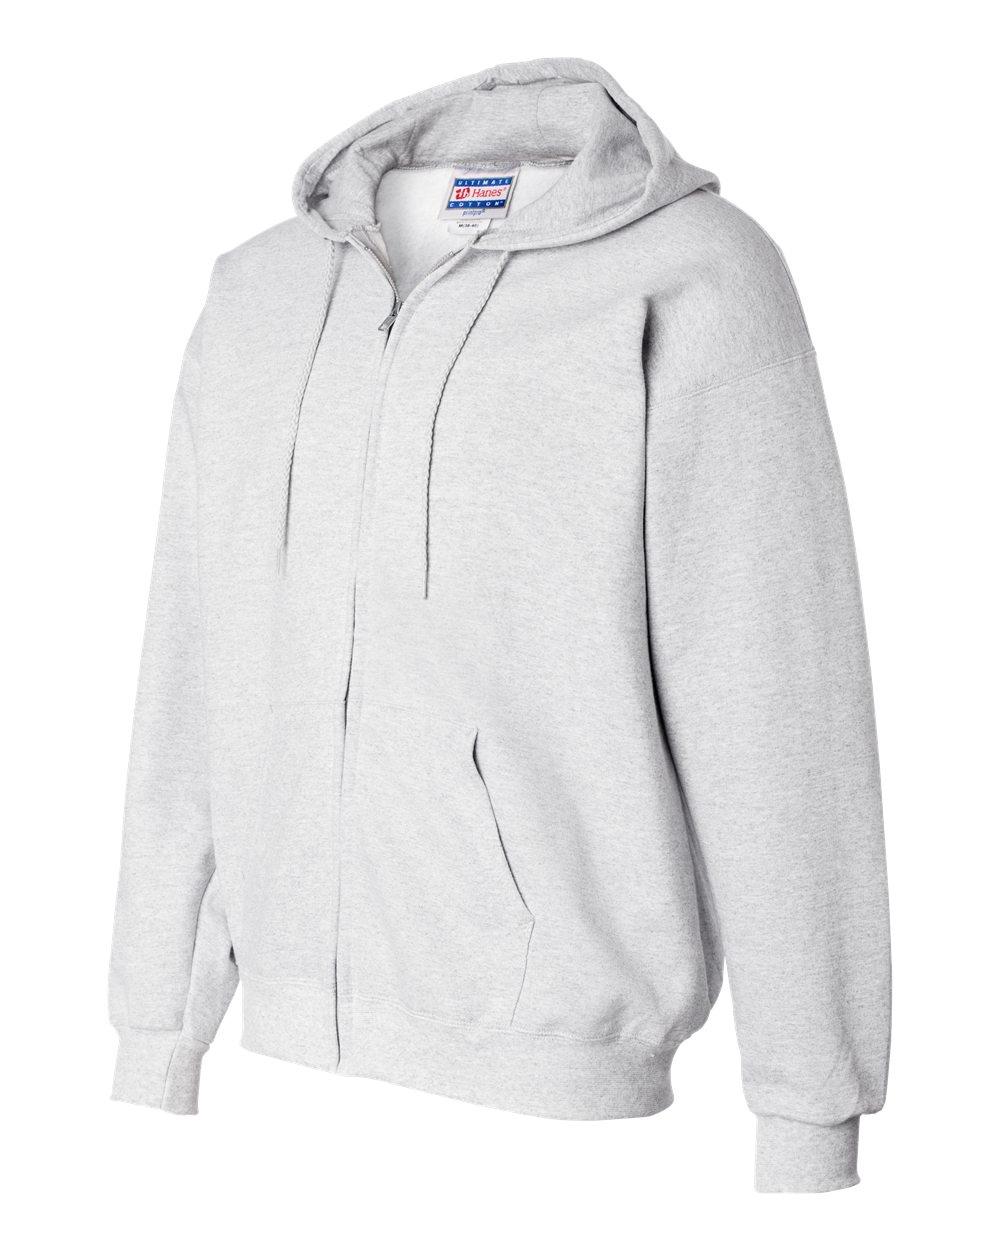 Hanes F280 - PrintProXP Ultimate Cotton Full-Zip Hooded Sweatshirt